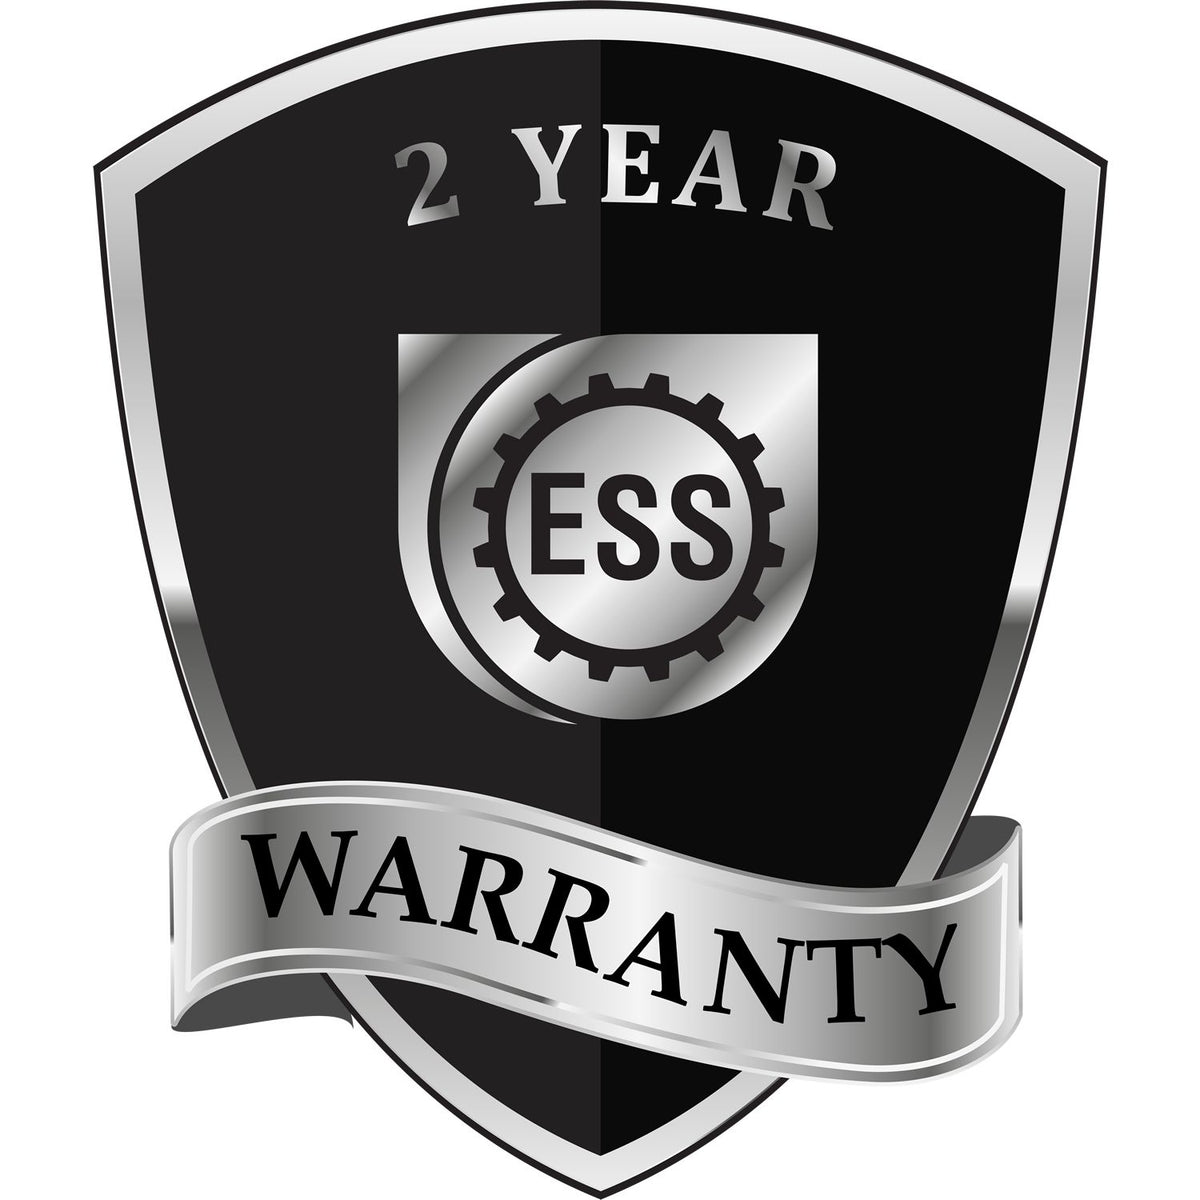 A black and silver badge or emblem showing warranty information for the Hybrid Nebraska Geologist Seal